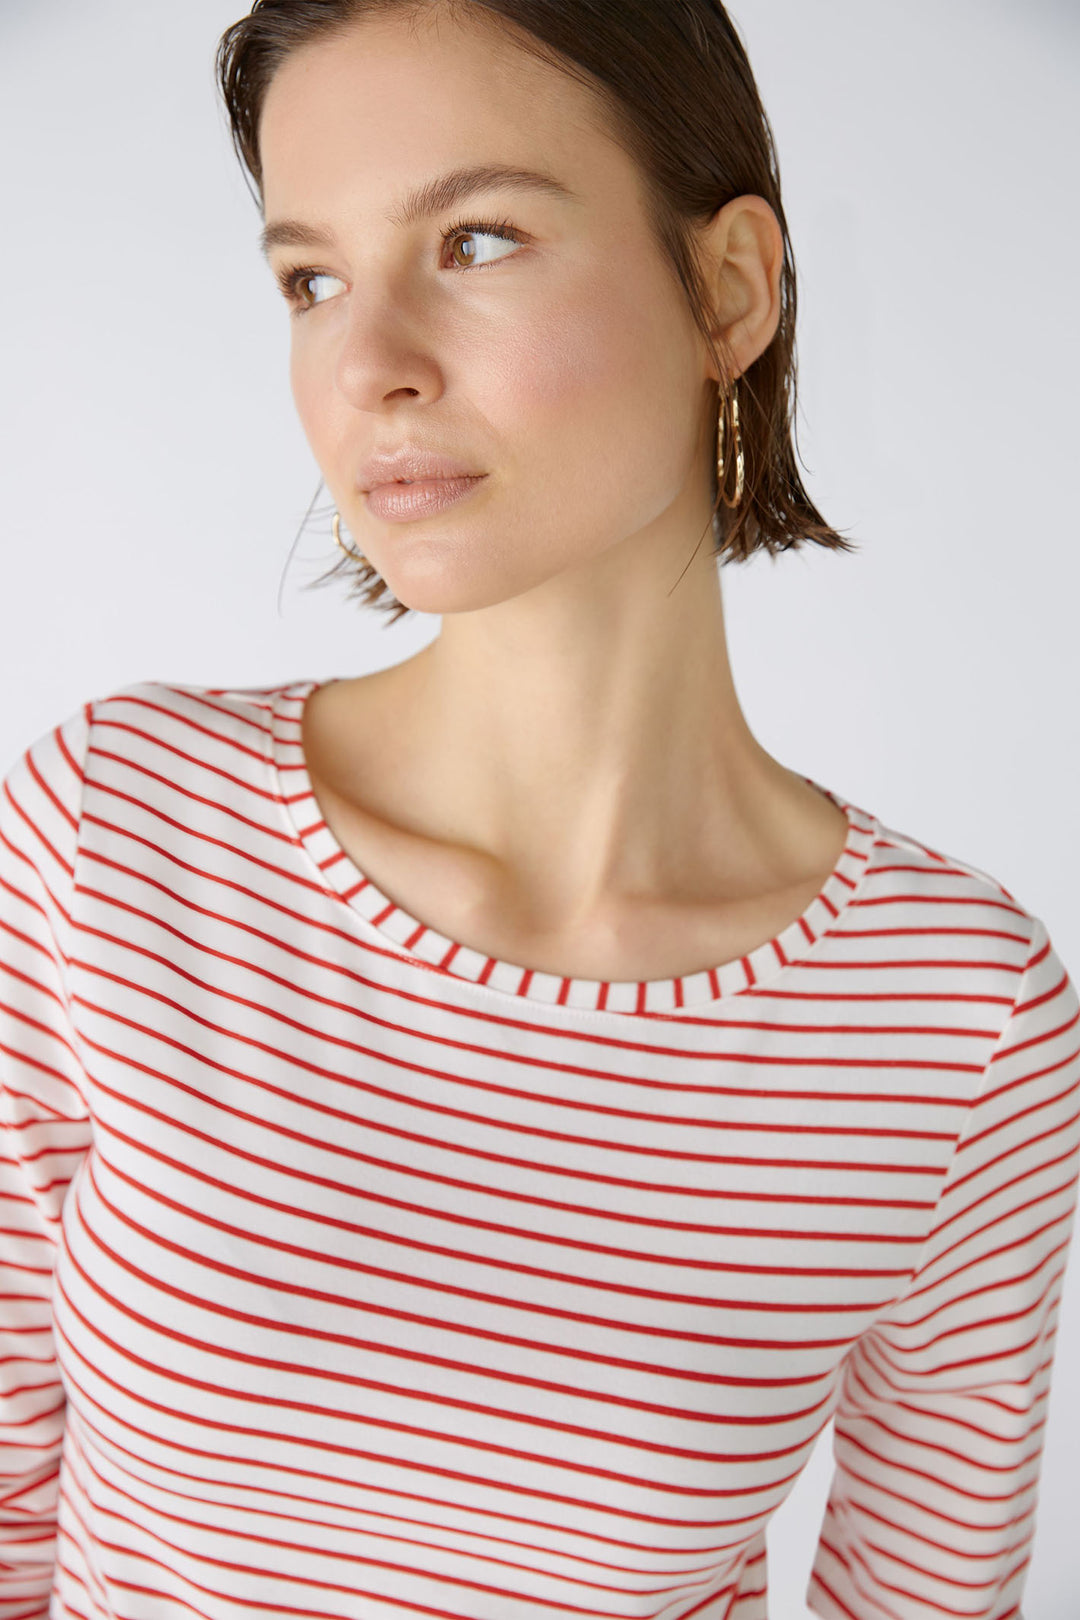 Oui 88220 White Red Sumiko Striped Long Sleeve Top - Olivia Grace Fashion